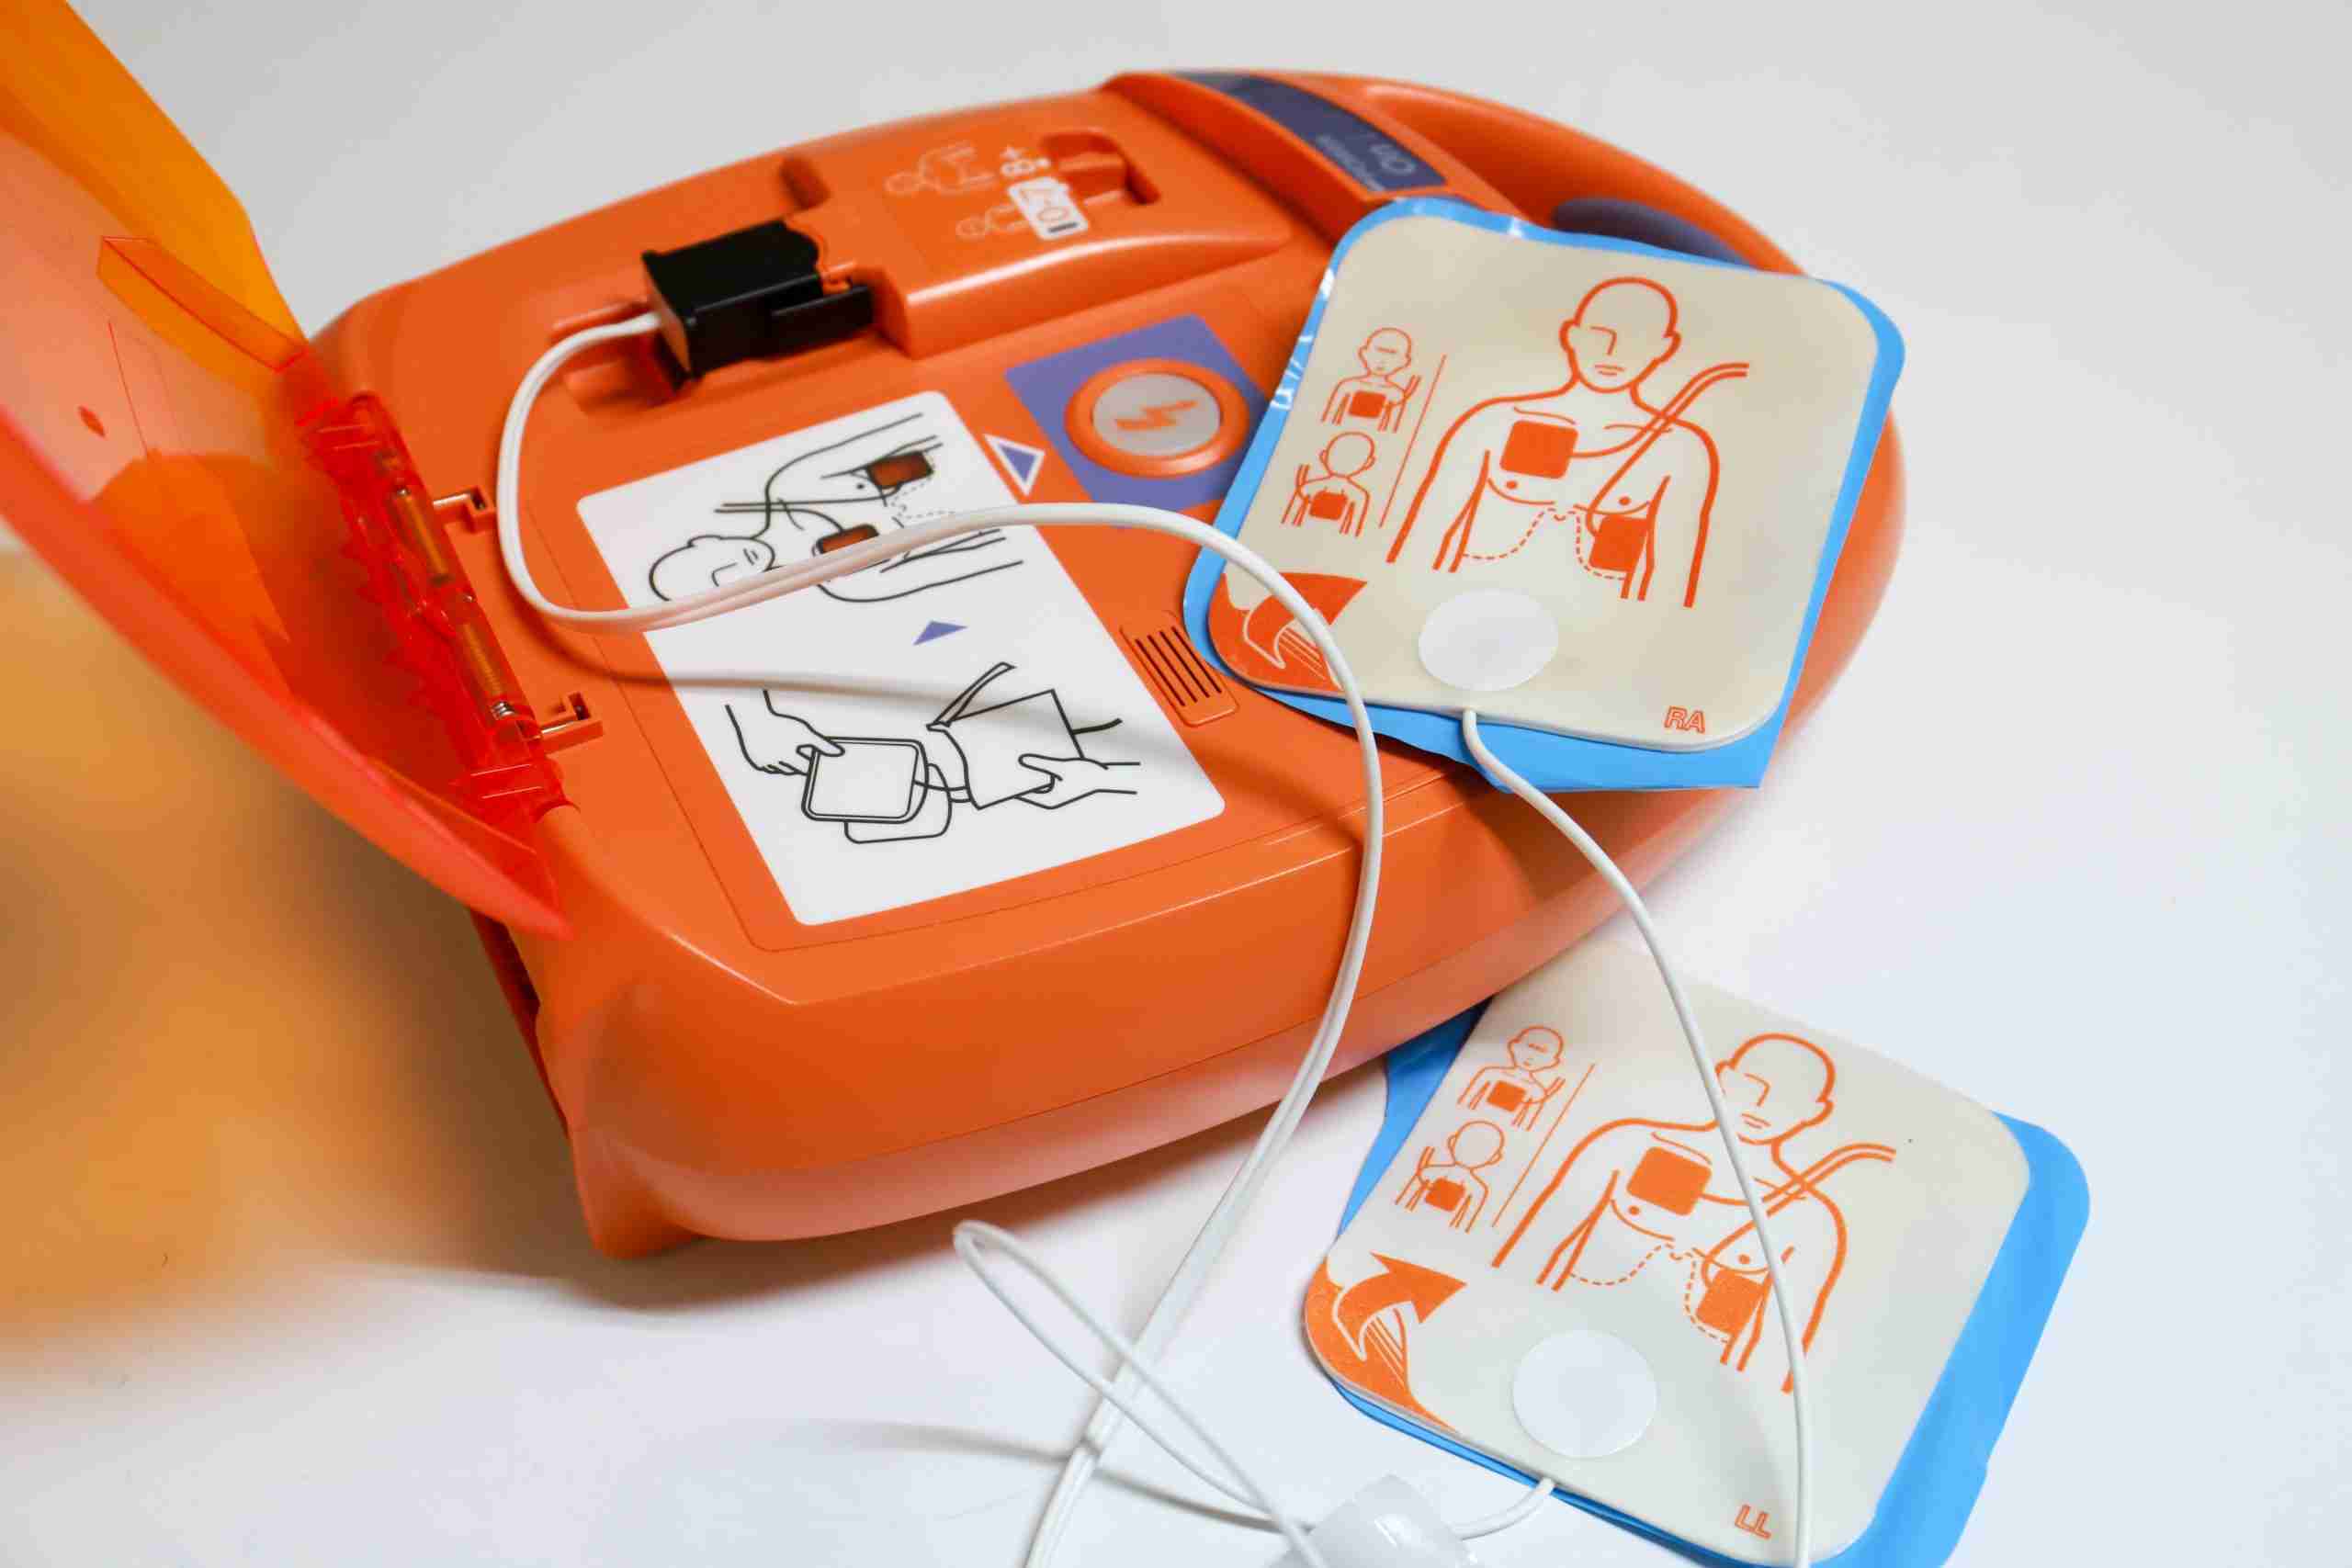 Open defibrillator